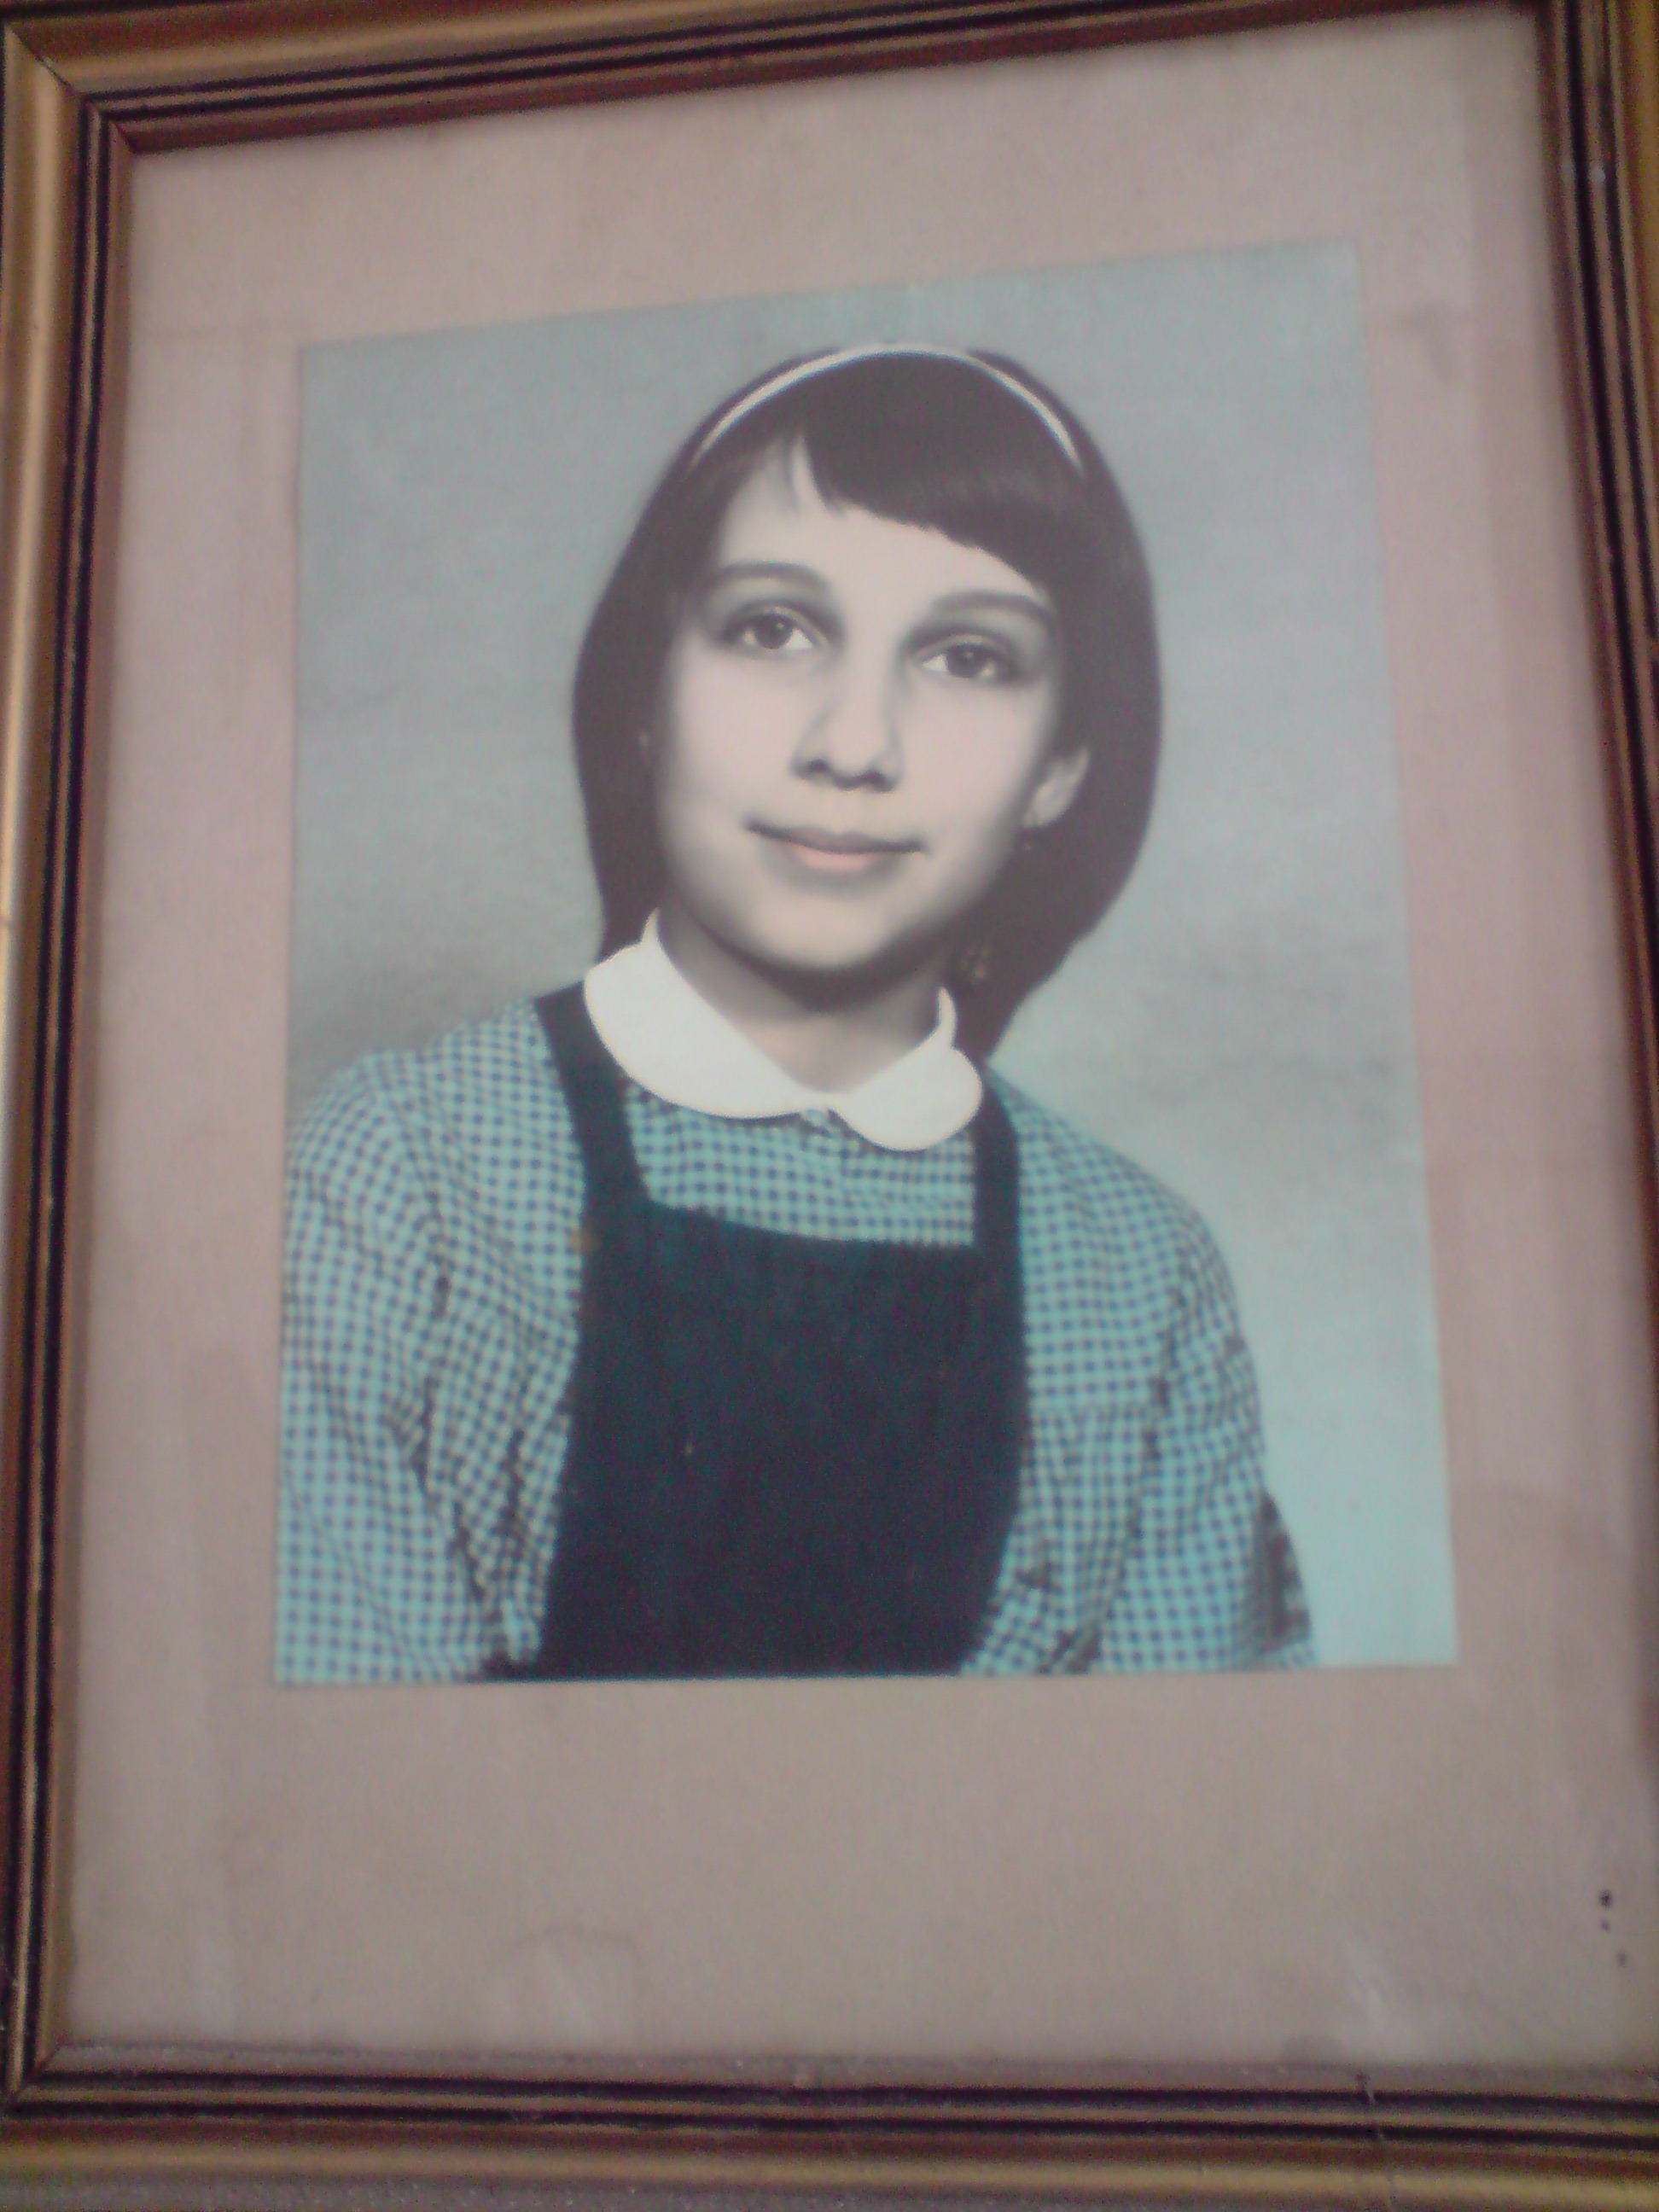 Carmen Iohannis a fost o eleva foarte silitoare. Sursa: justitiarul.ro